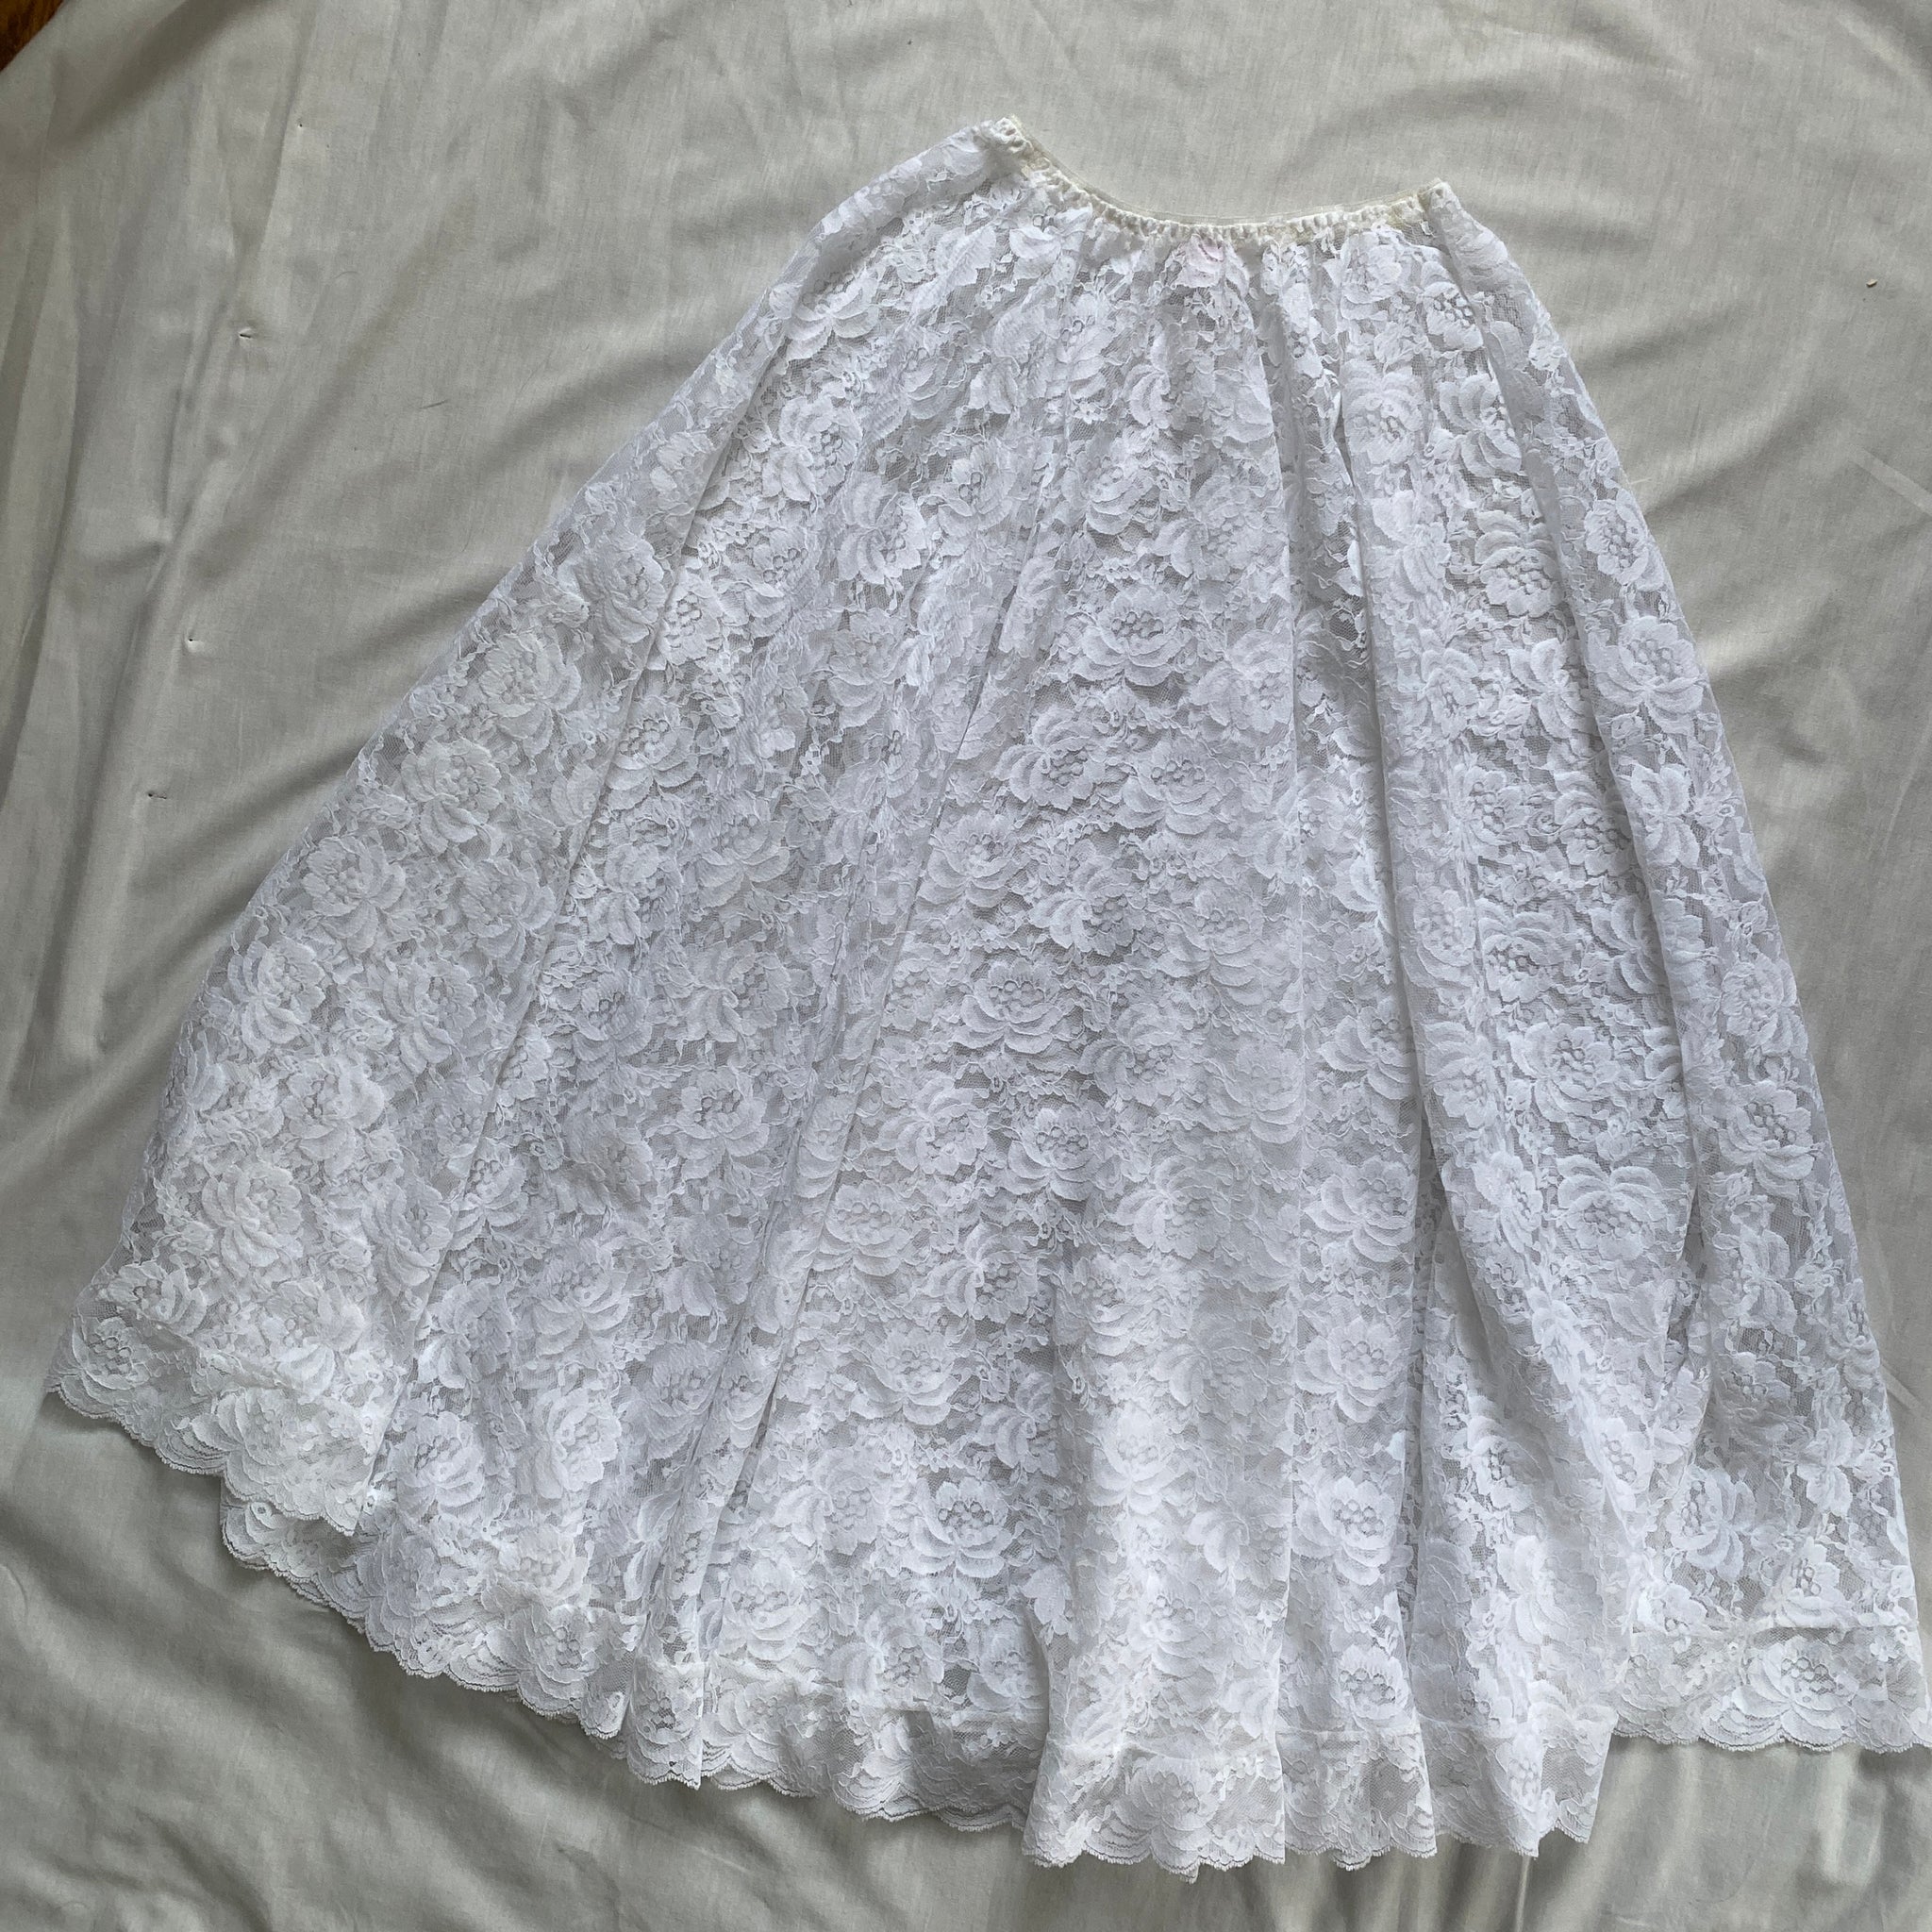 Sheer Lace Skirt